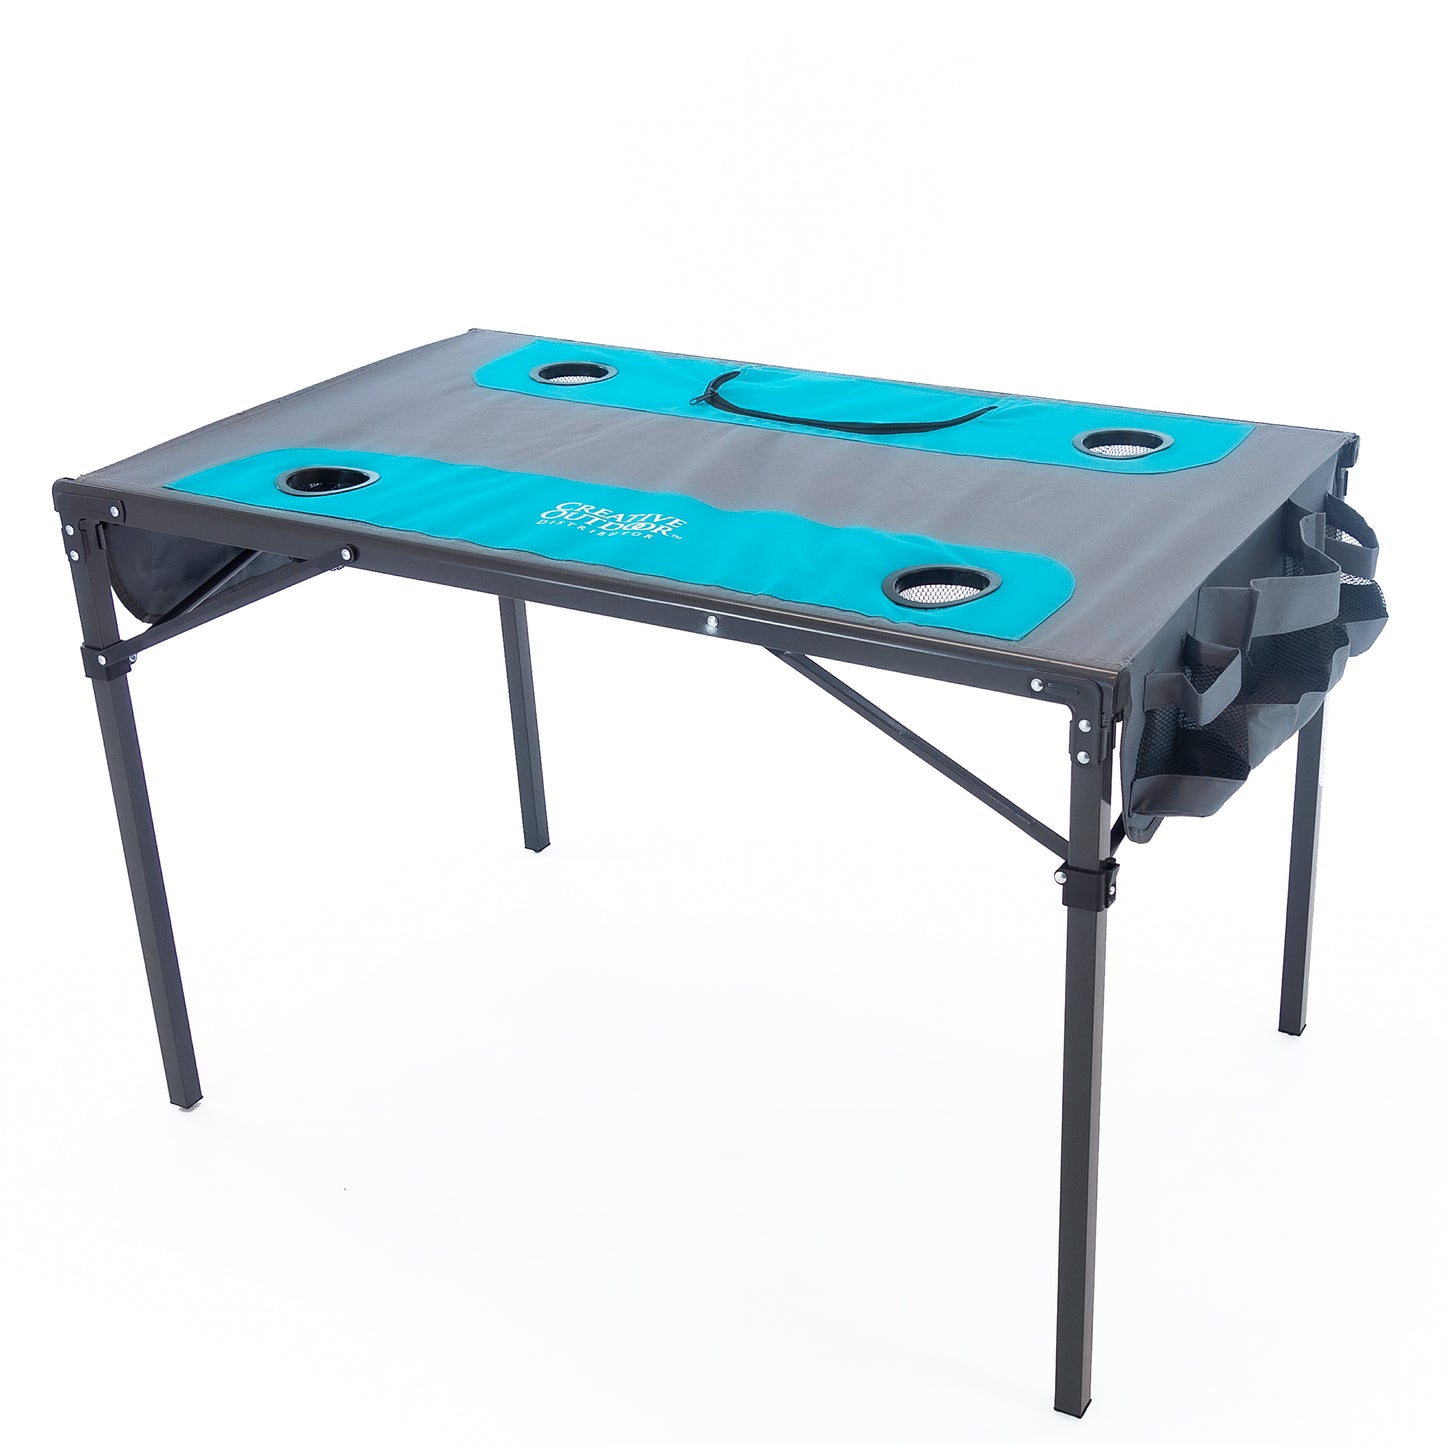 1 Teal Luxury Loveseat + 1 Teal Ice Box Cooler Folding Table - Custom Folding Wagons